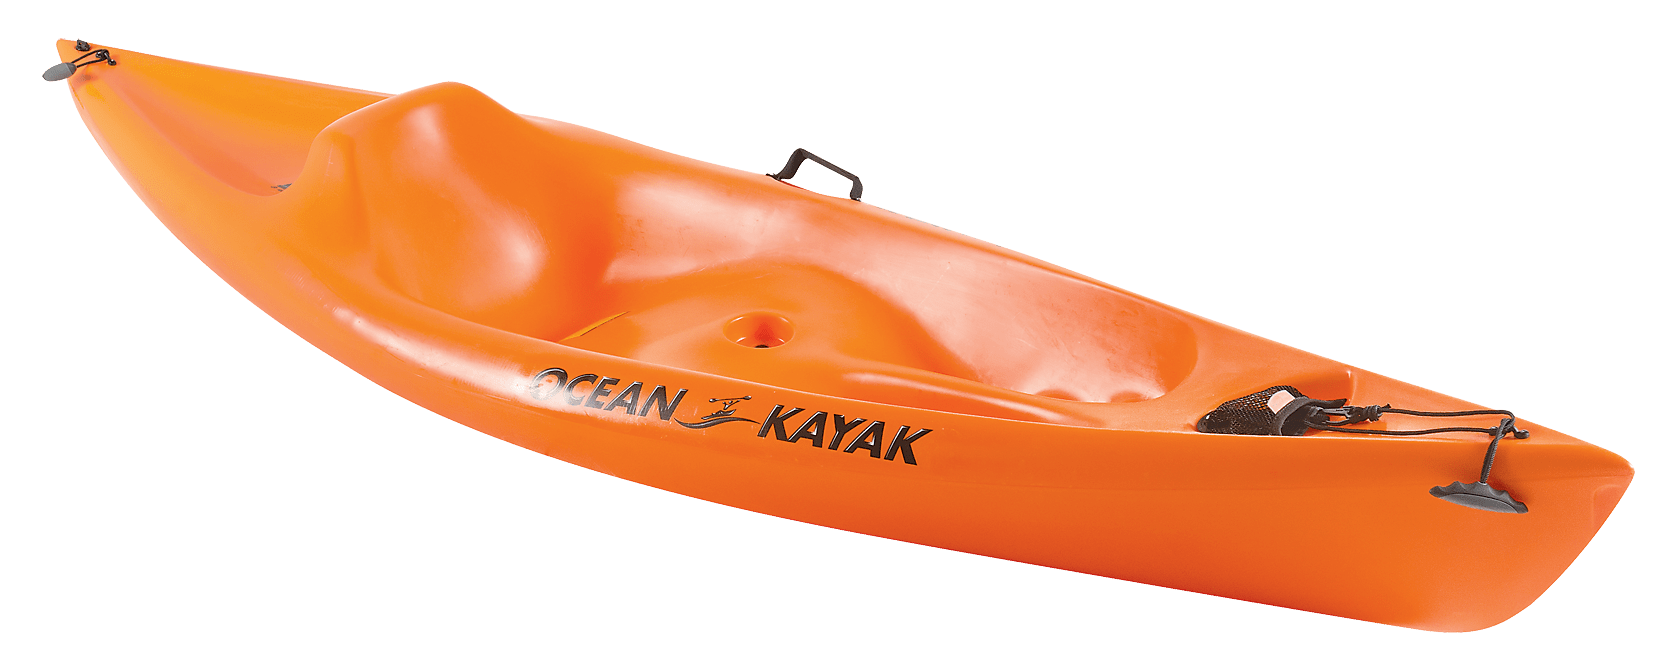 Kayaking clipart background. Ocean kayak transparent png